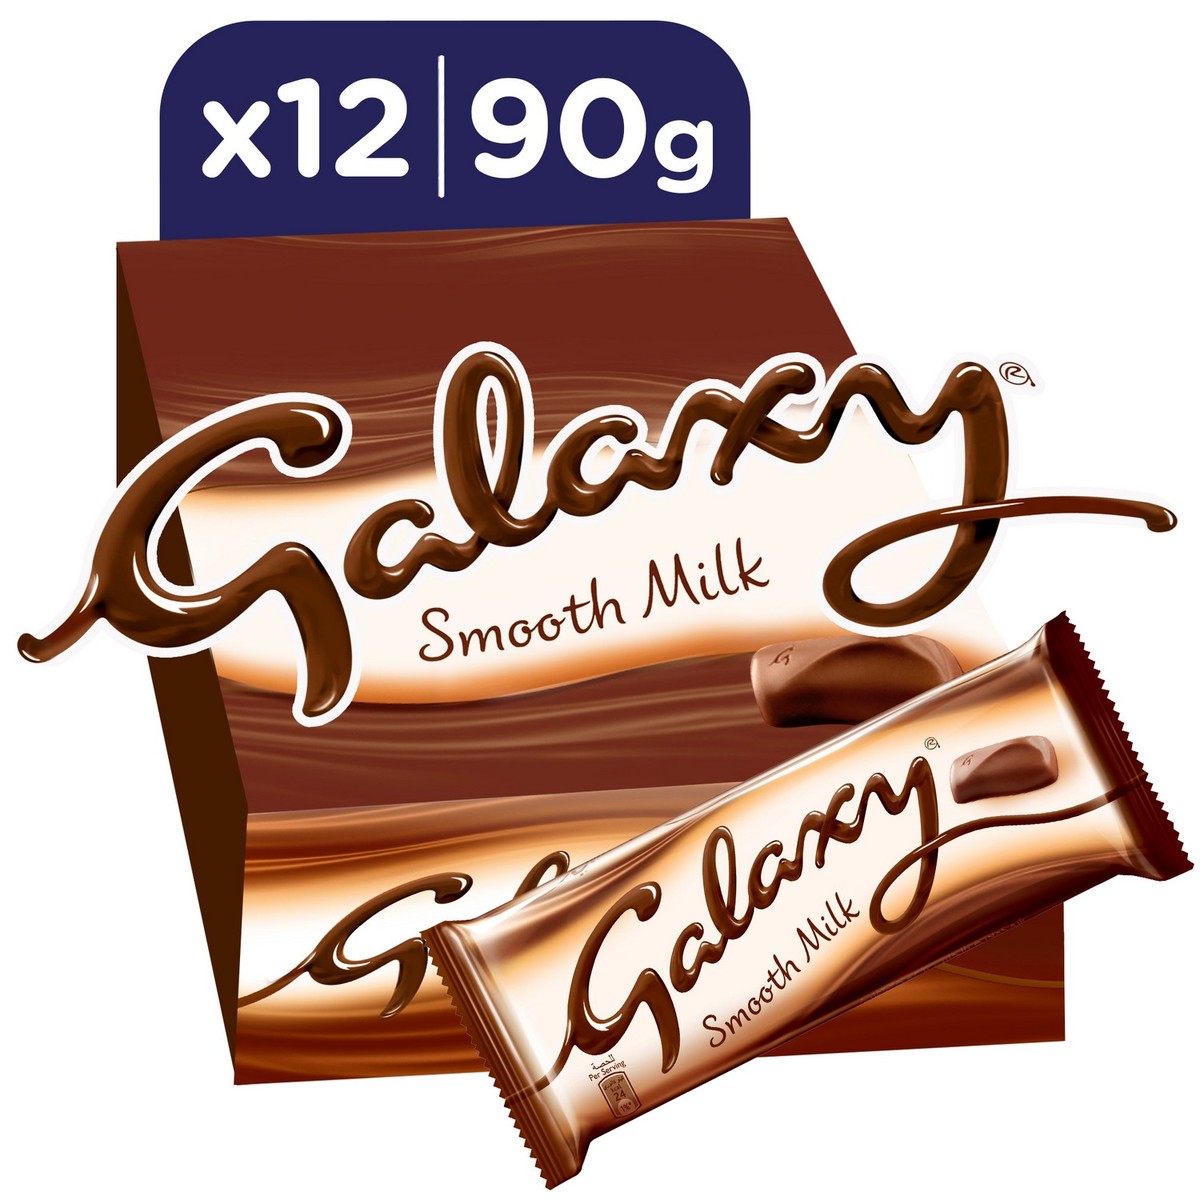 Galaxy Smooth Milk Chocolate Bar 90 g